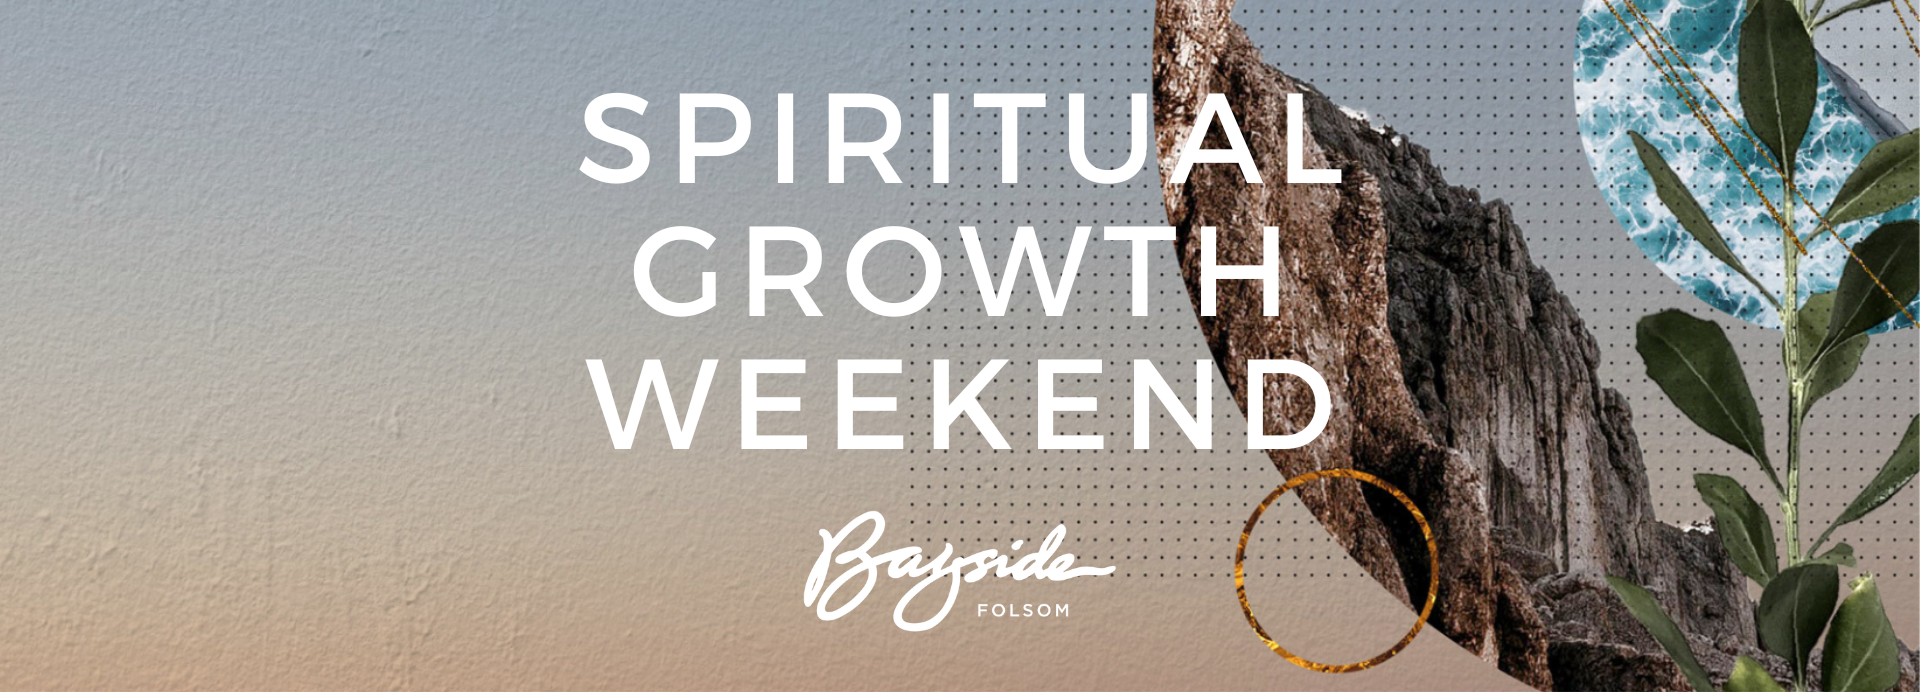 Spiritual Growth Weekend